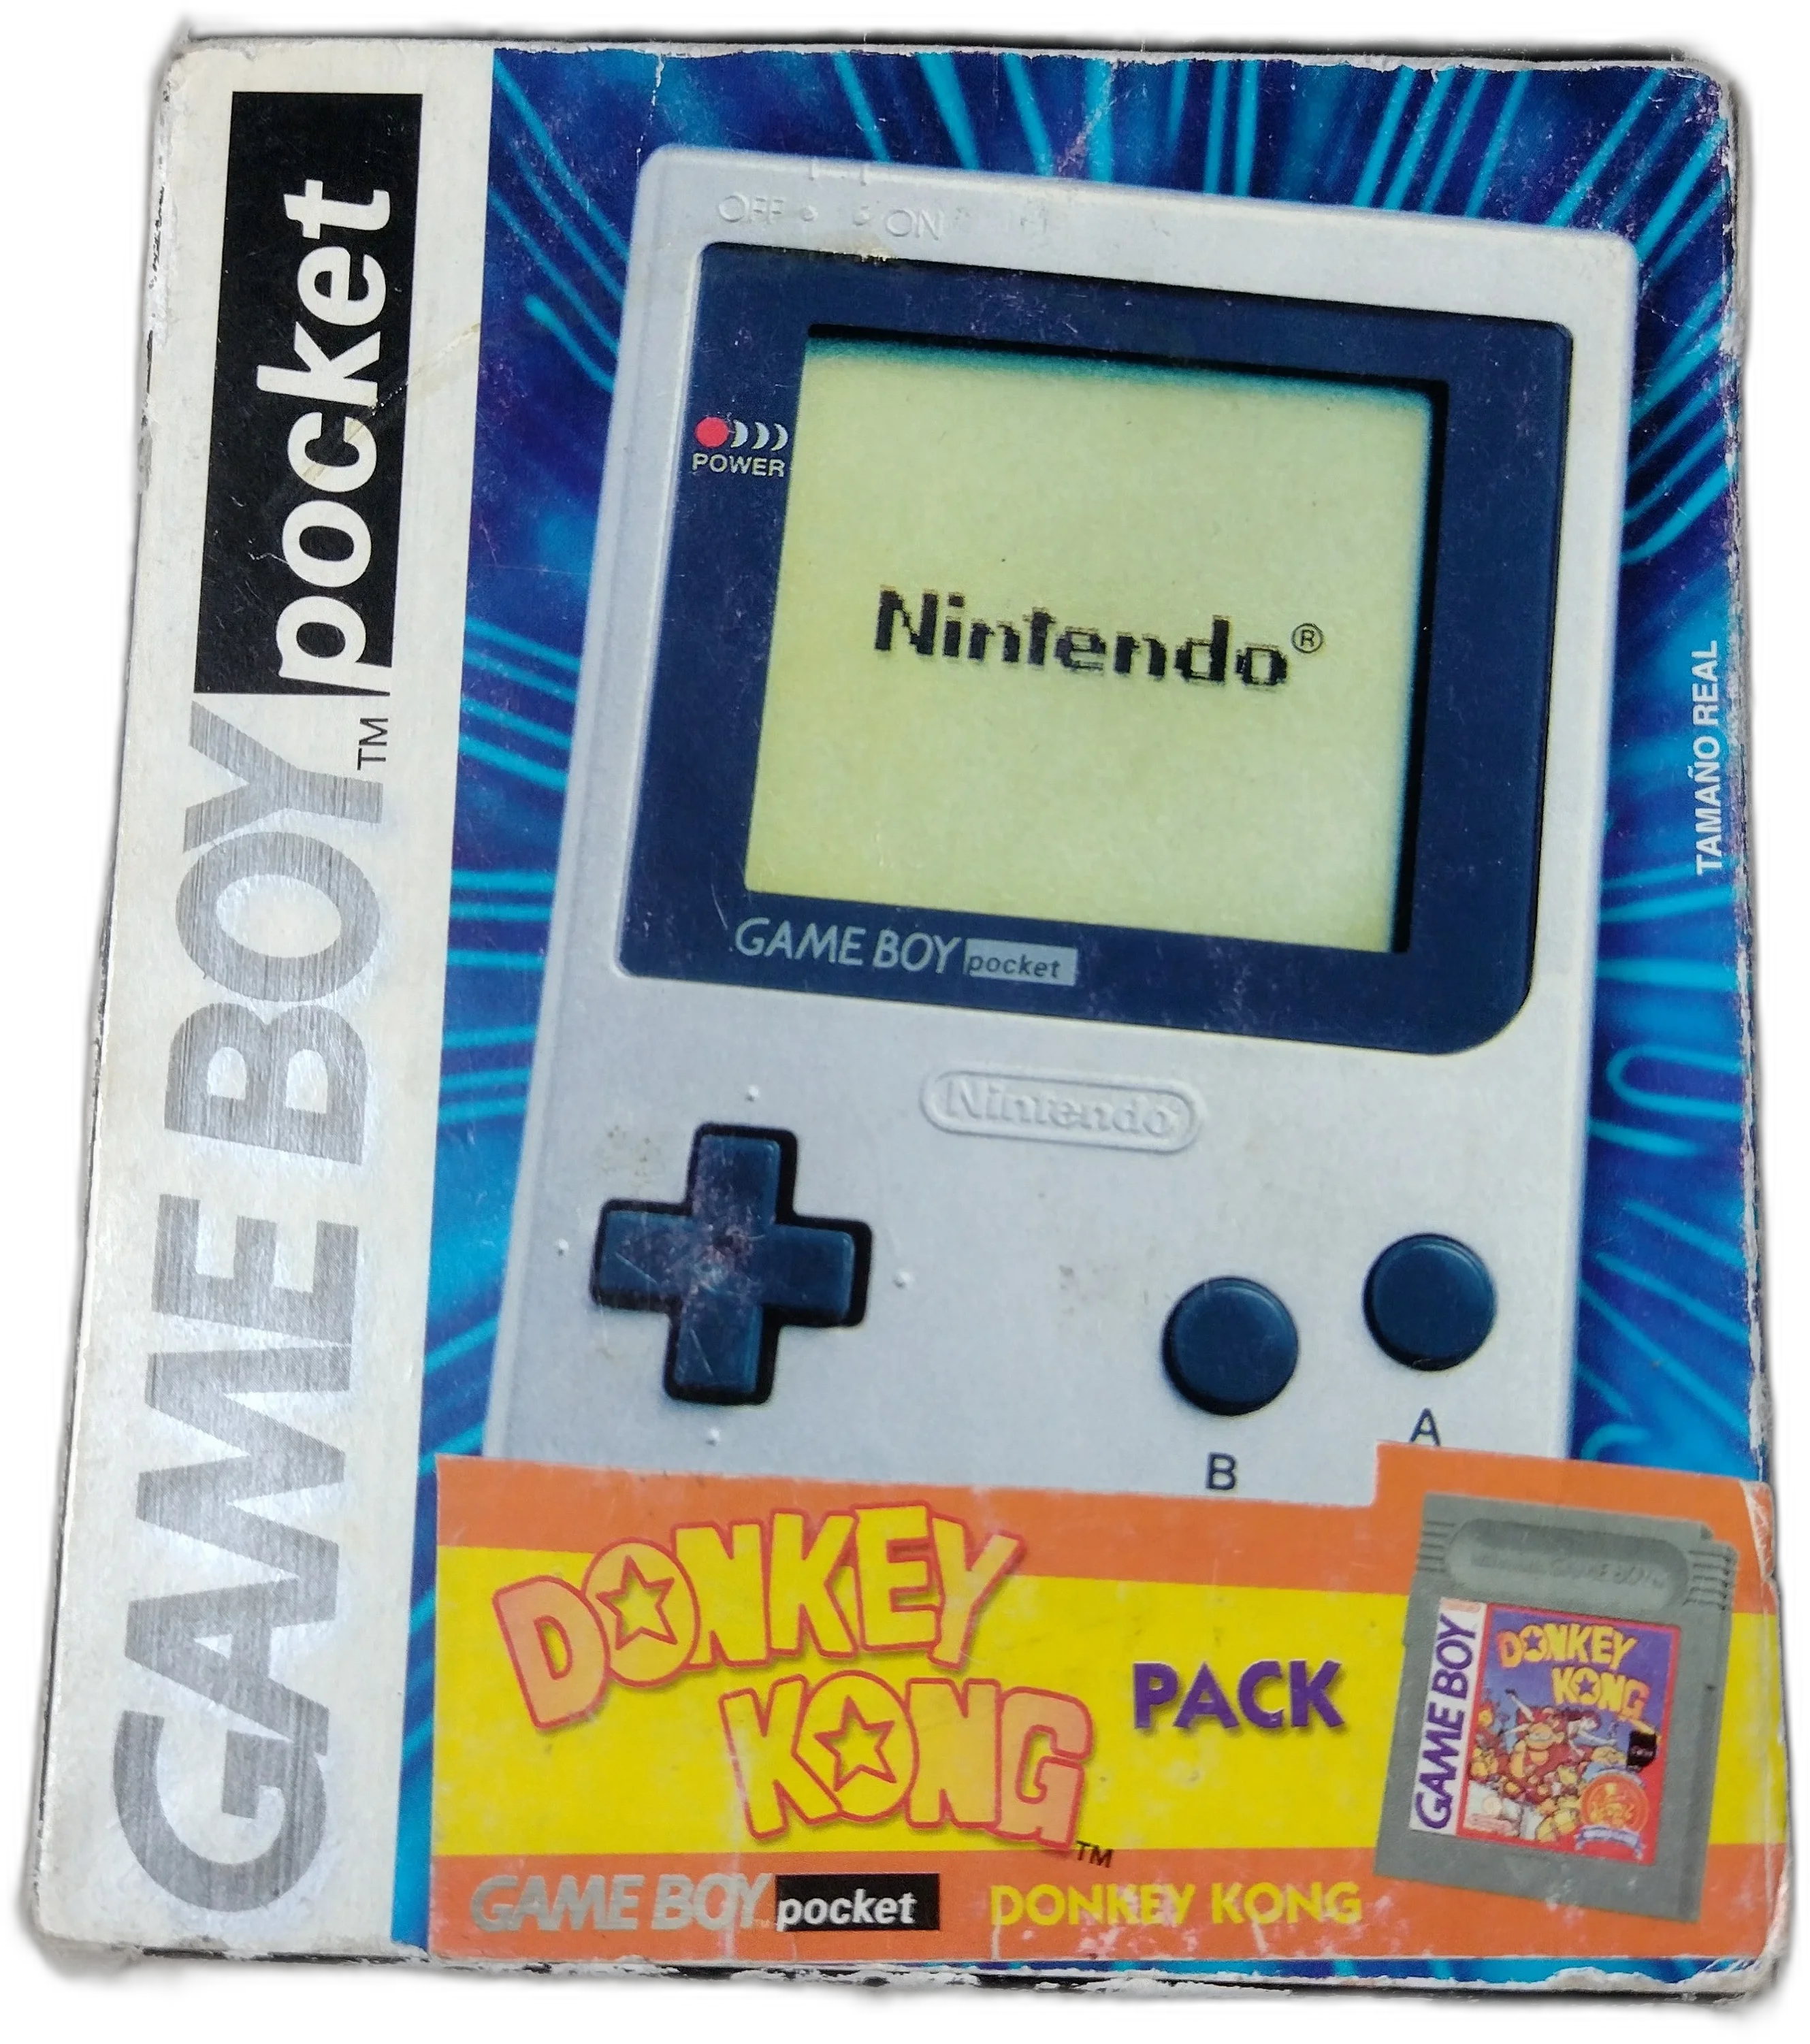  Nintendo Game Boy Pocket Donkey Kong Pack